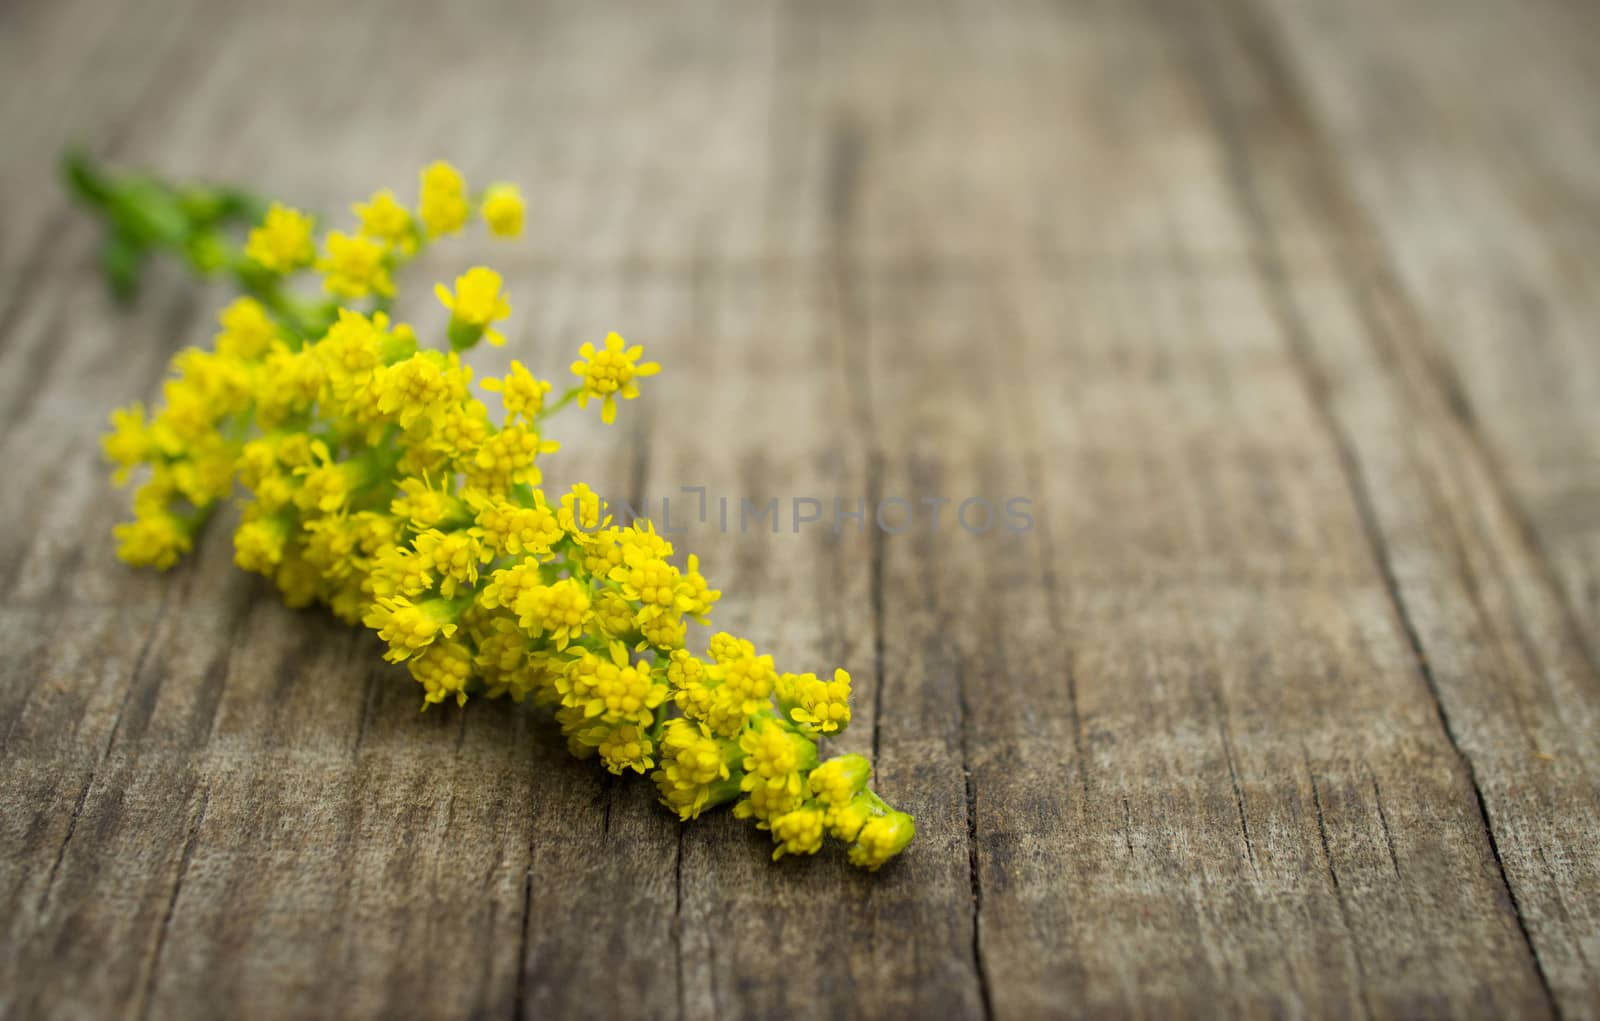 Small yellow flowers by kbuntu